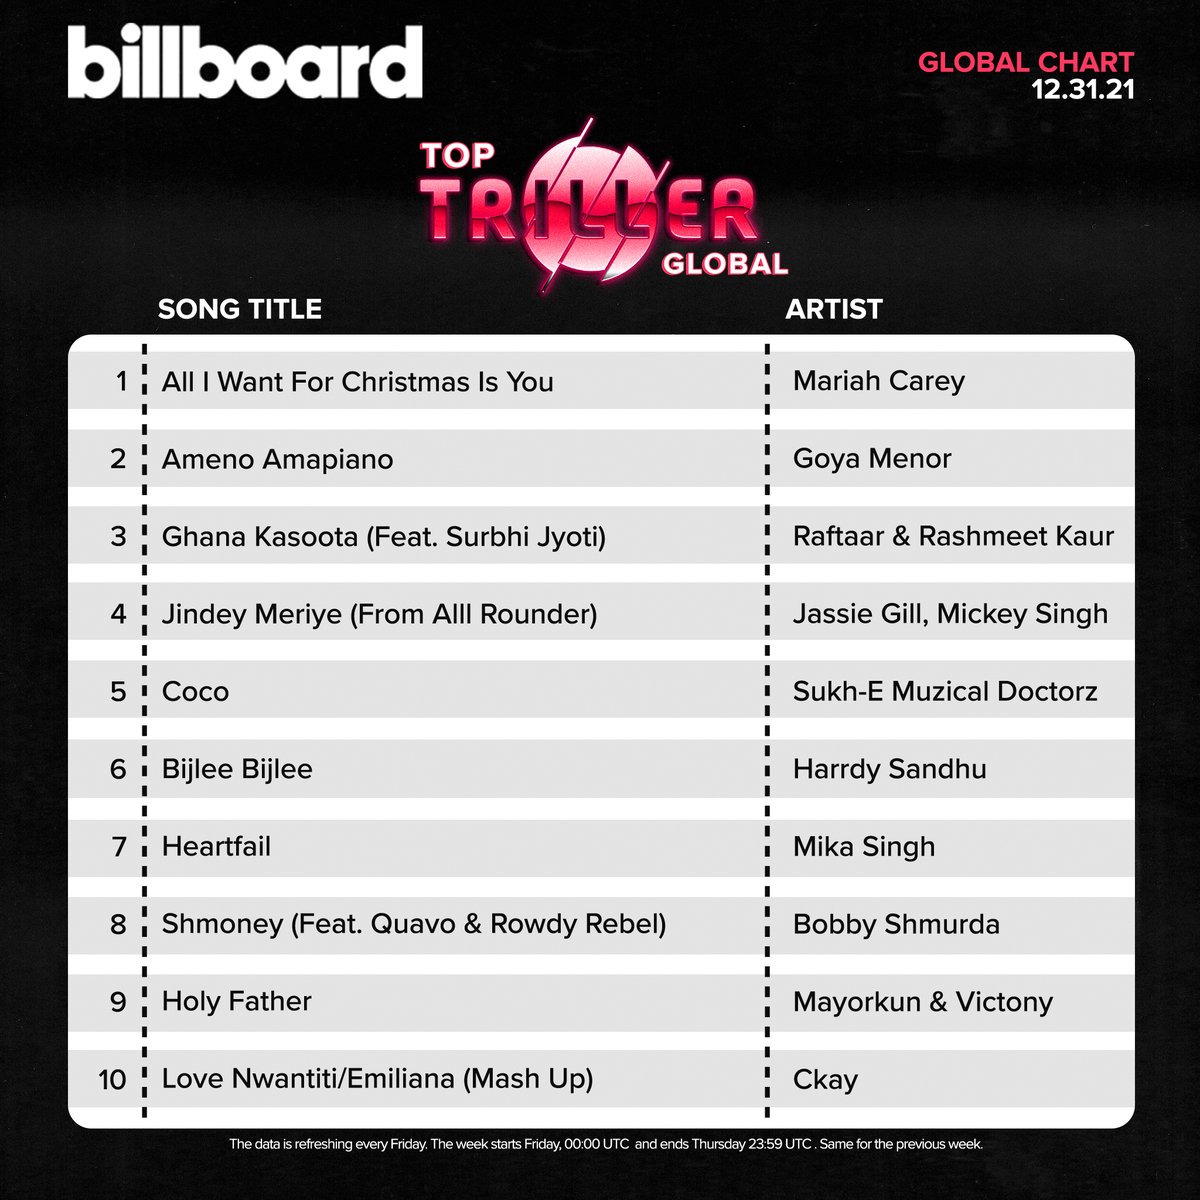 .@billboard Top Triller Global Weekly Chart! #BillboardxTriller
.
.
.
@MariahCarey #GoyaMenor @raftaarmusic @Rashmeetmusic @jassiegill #MickeySingh #SukhEMuzicalDoctorz @MikaSingh @bobbyshmurda6S9 @ckay_yo